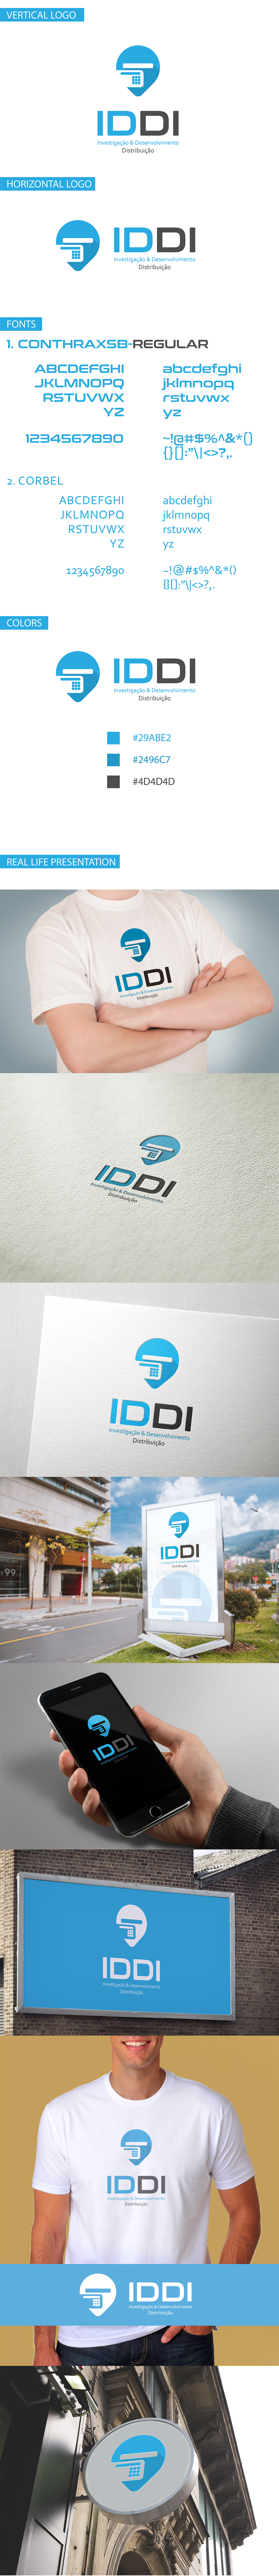 iddi pos pointofsale location hardware Technology Shopping purchase logo identity